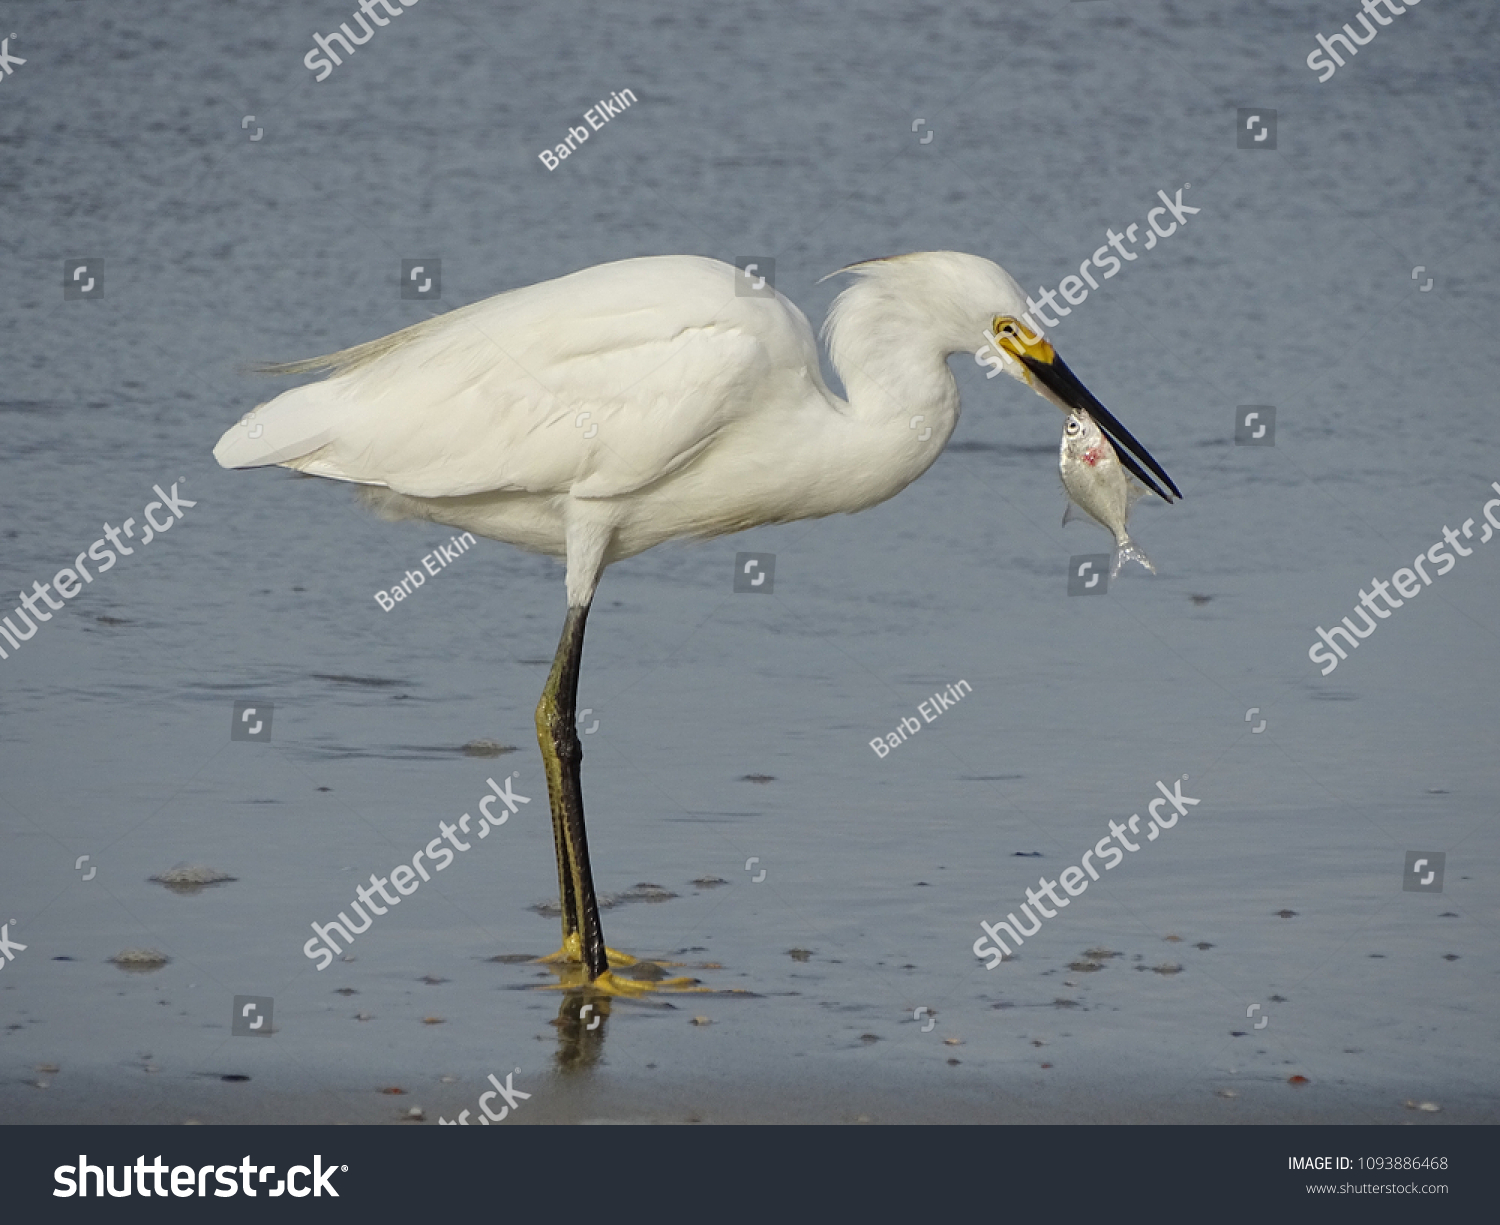 Snowy White Egret Bird On Beach Stock Photo 1093886468 | Shutterstock